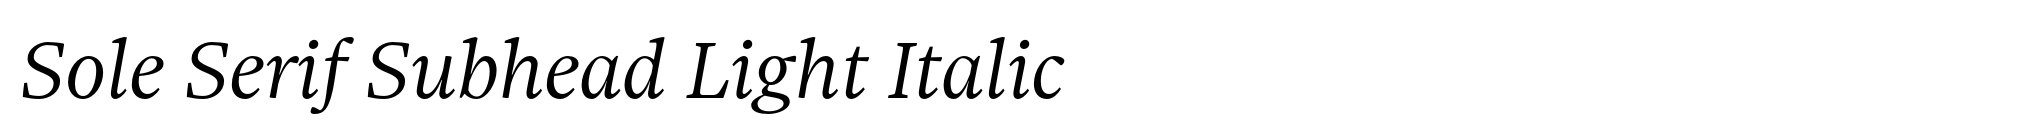 Sole Serif Subhead Light Italic image